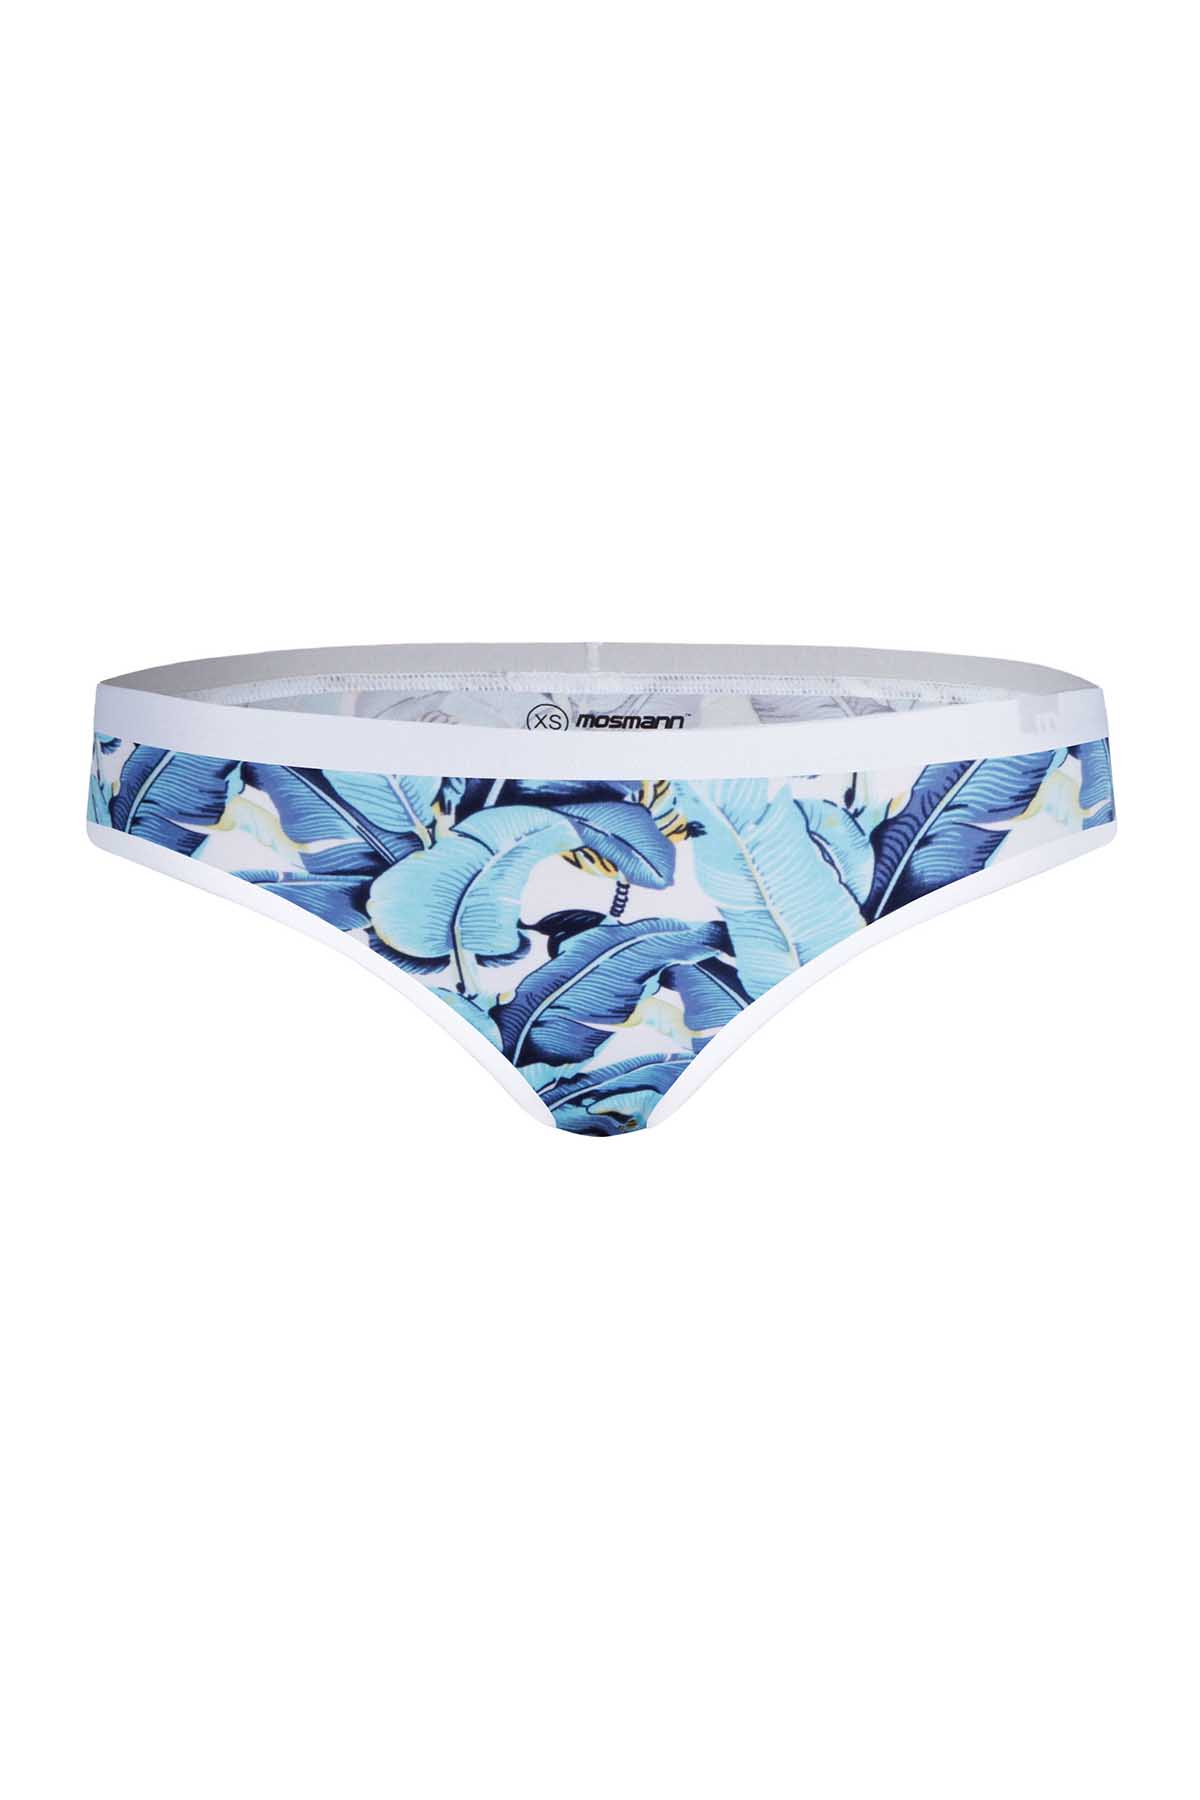 Mosmann Blue Congo Bikini Brief Panty